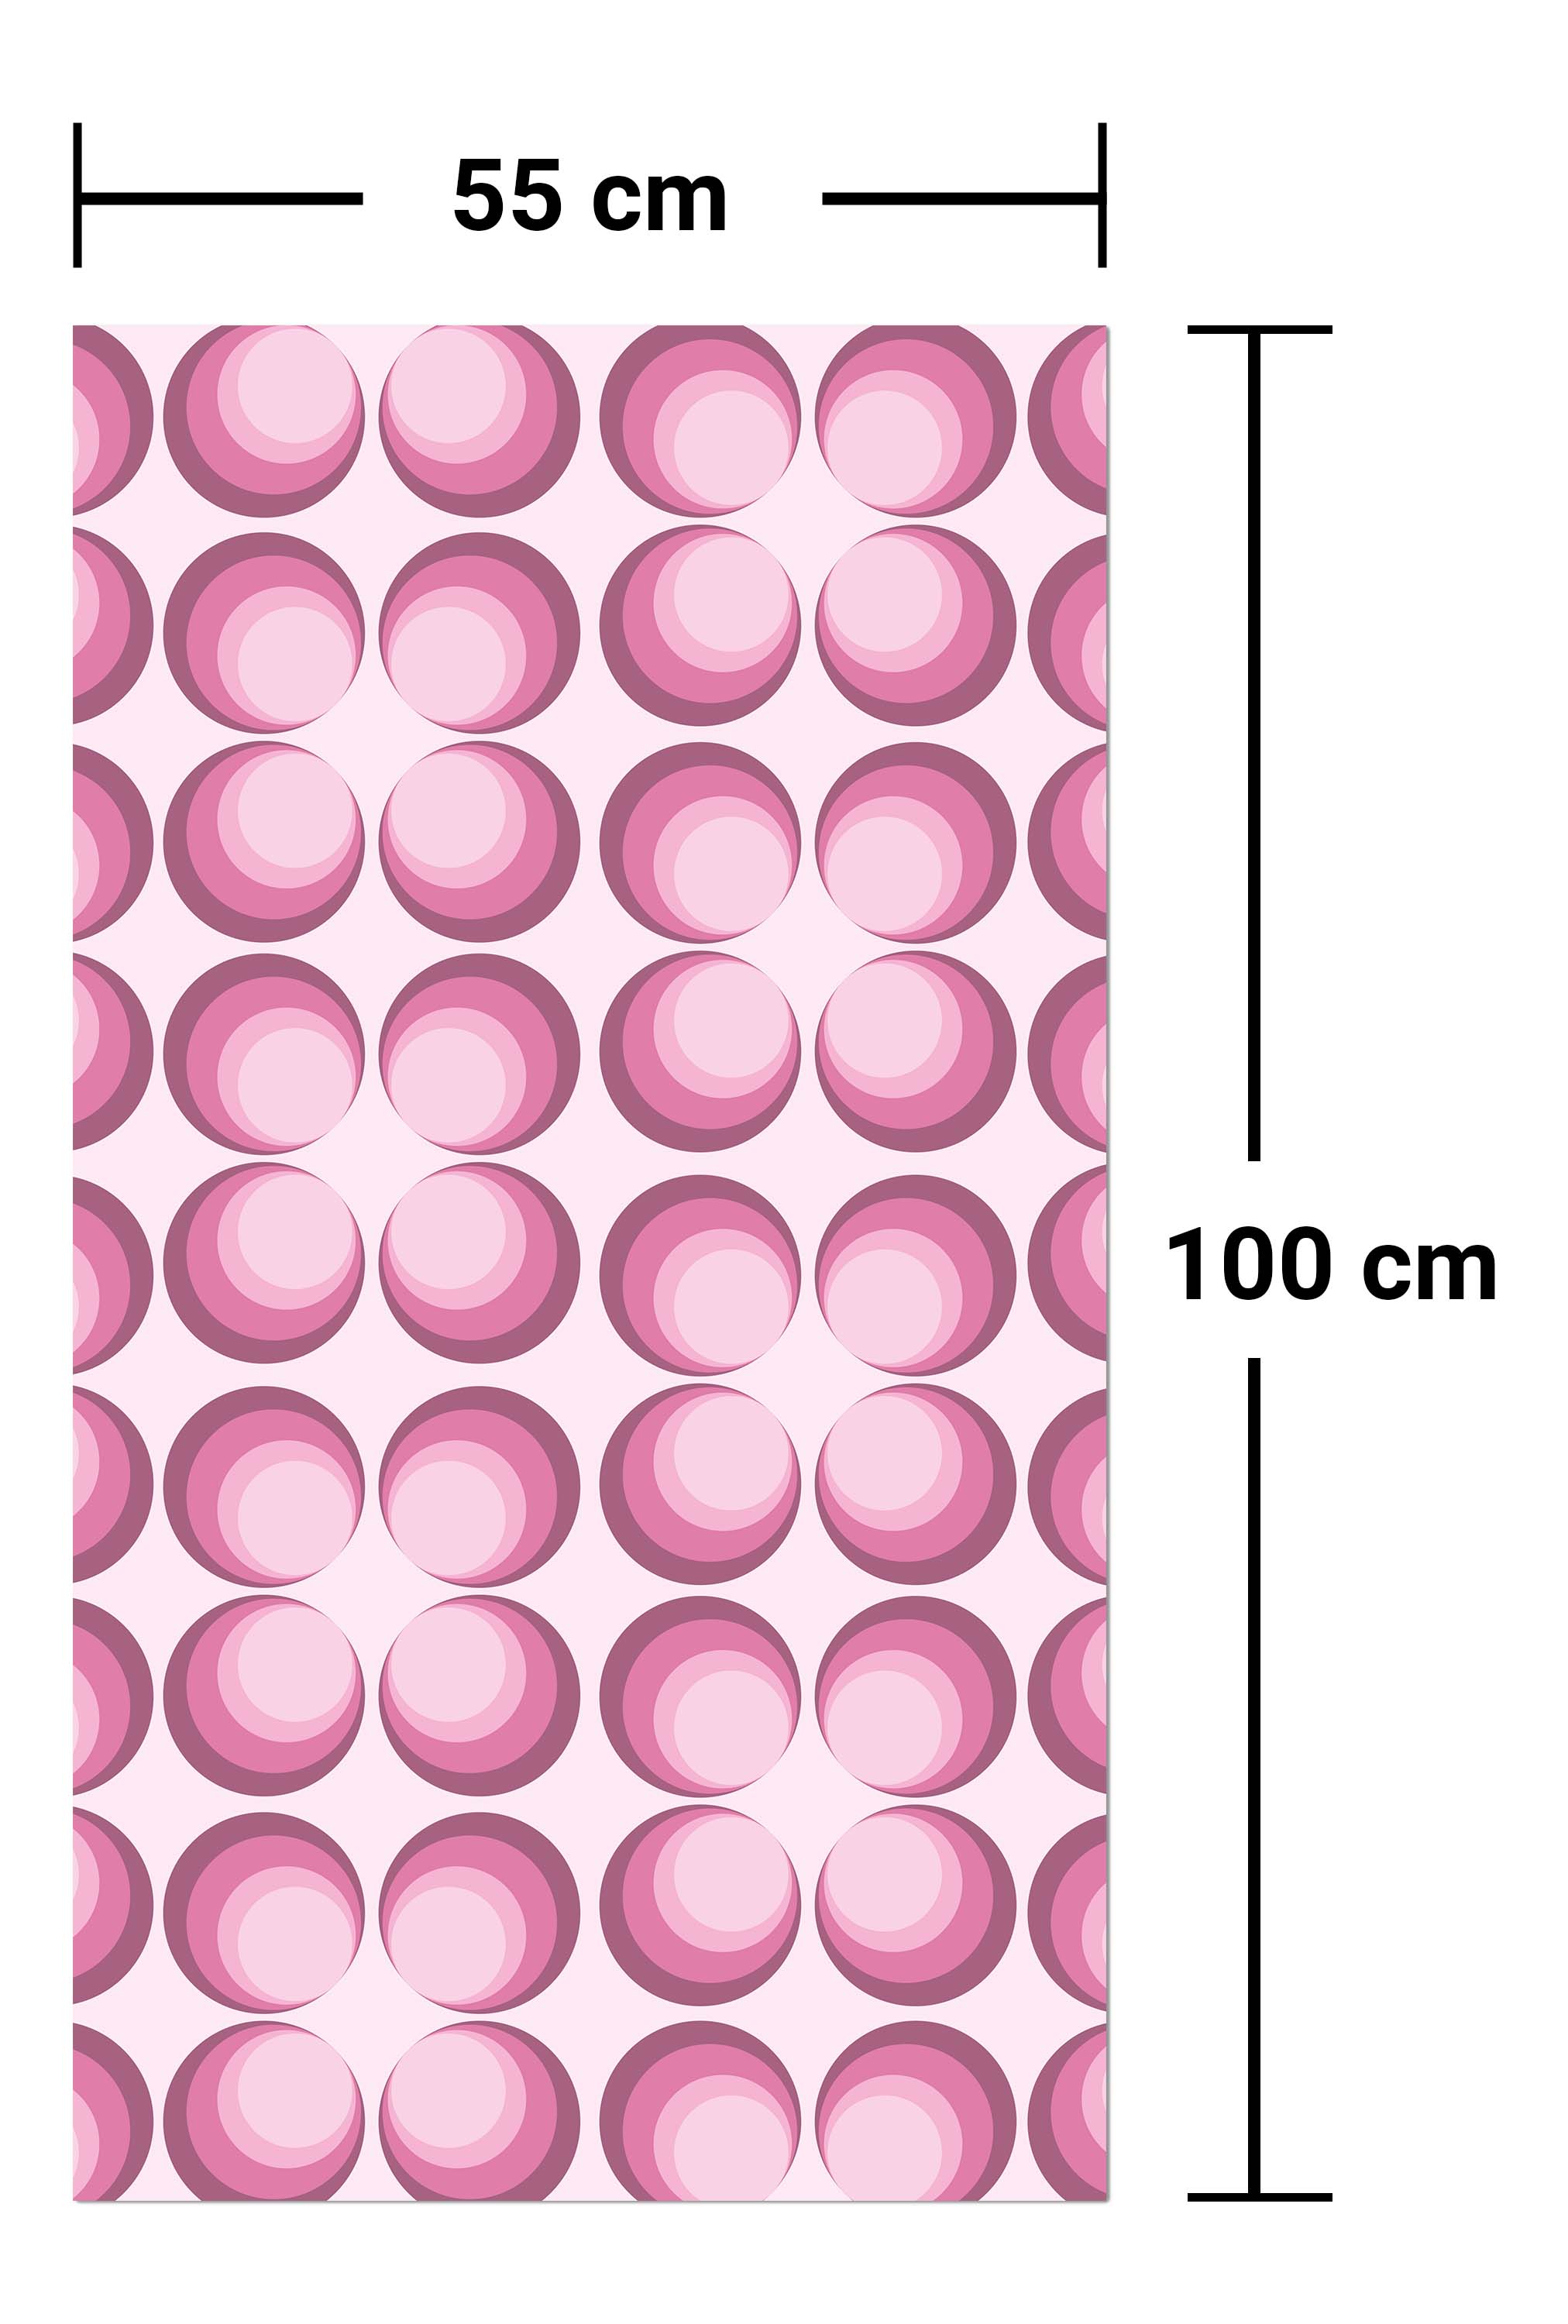 Garderobe Retrokreise Rosa Muster M0101 entdecken - Bild 7